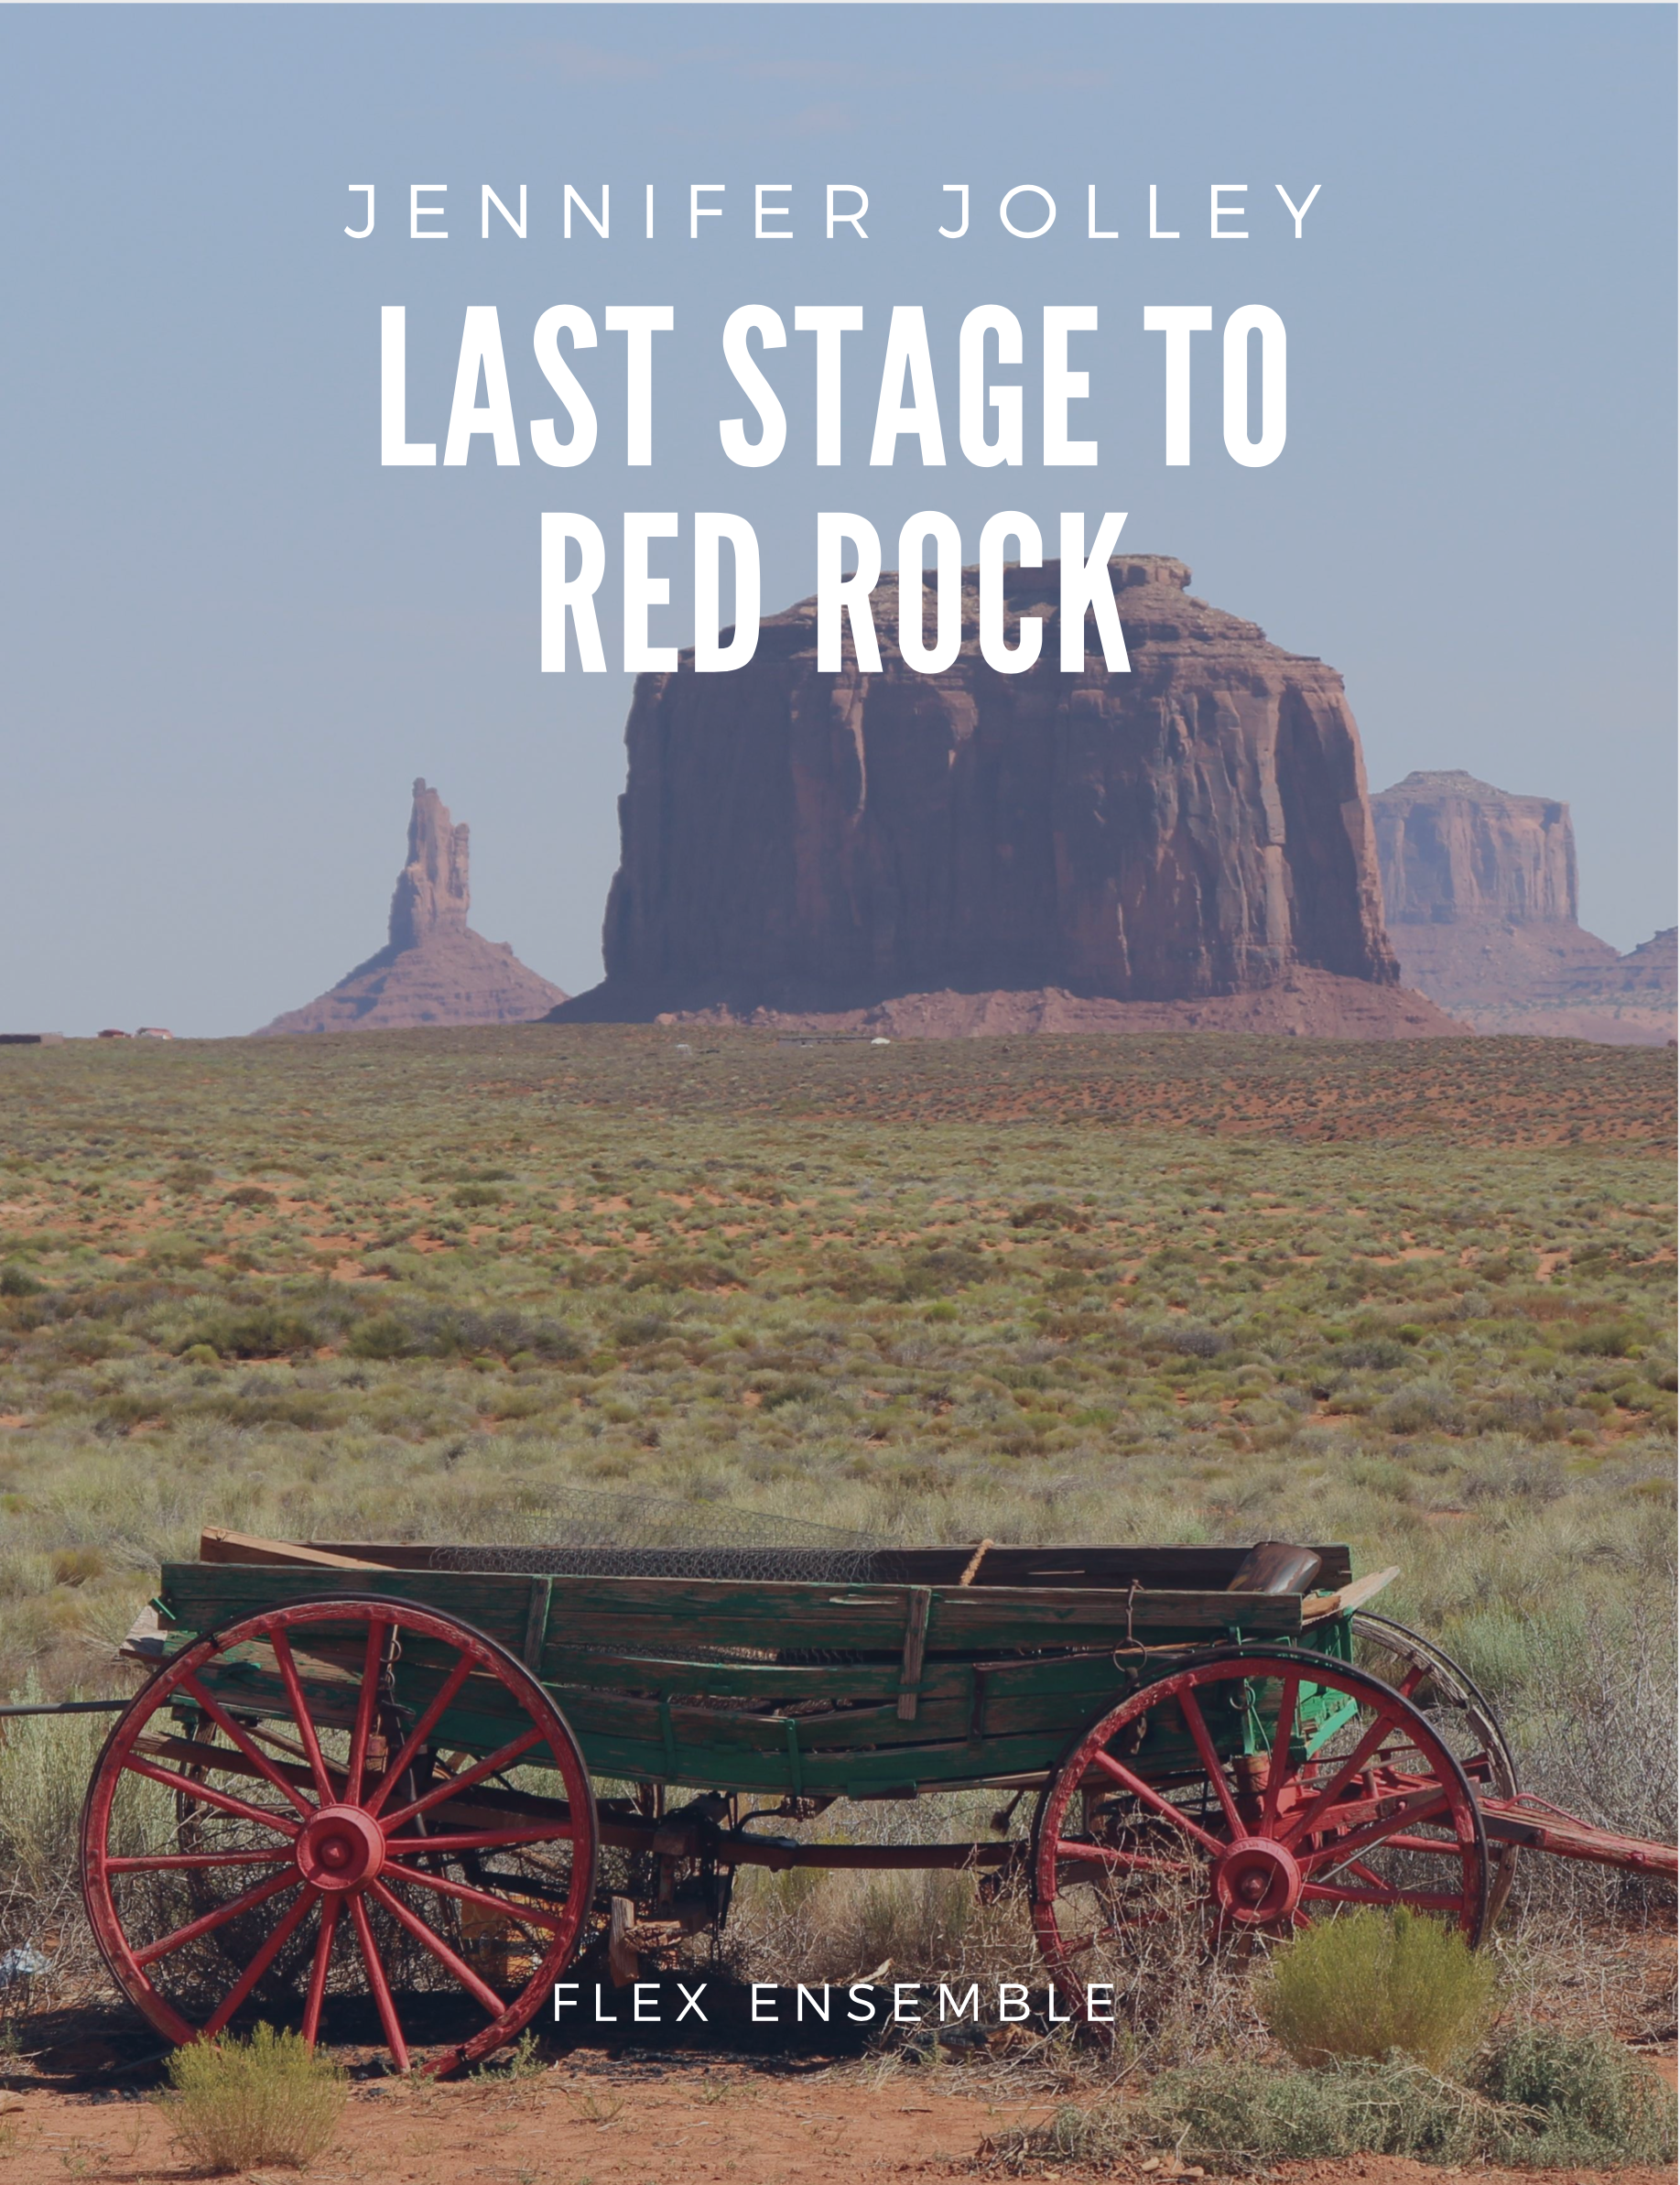 Last Stage To Red Rock (Flex Version Score Only) by Jennifer Jolley